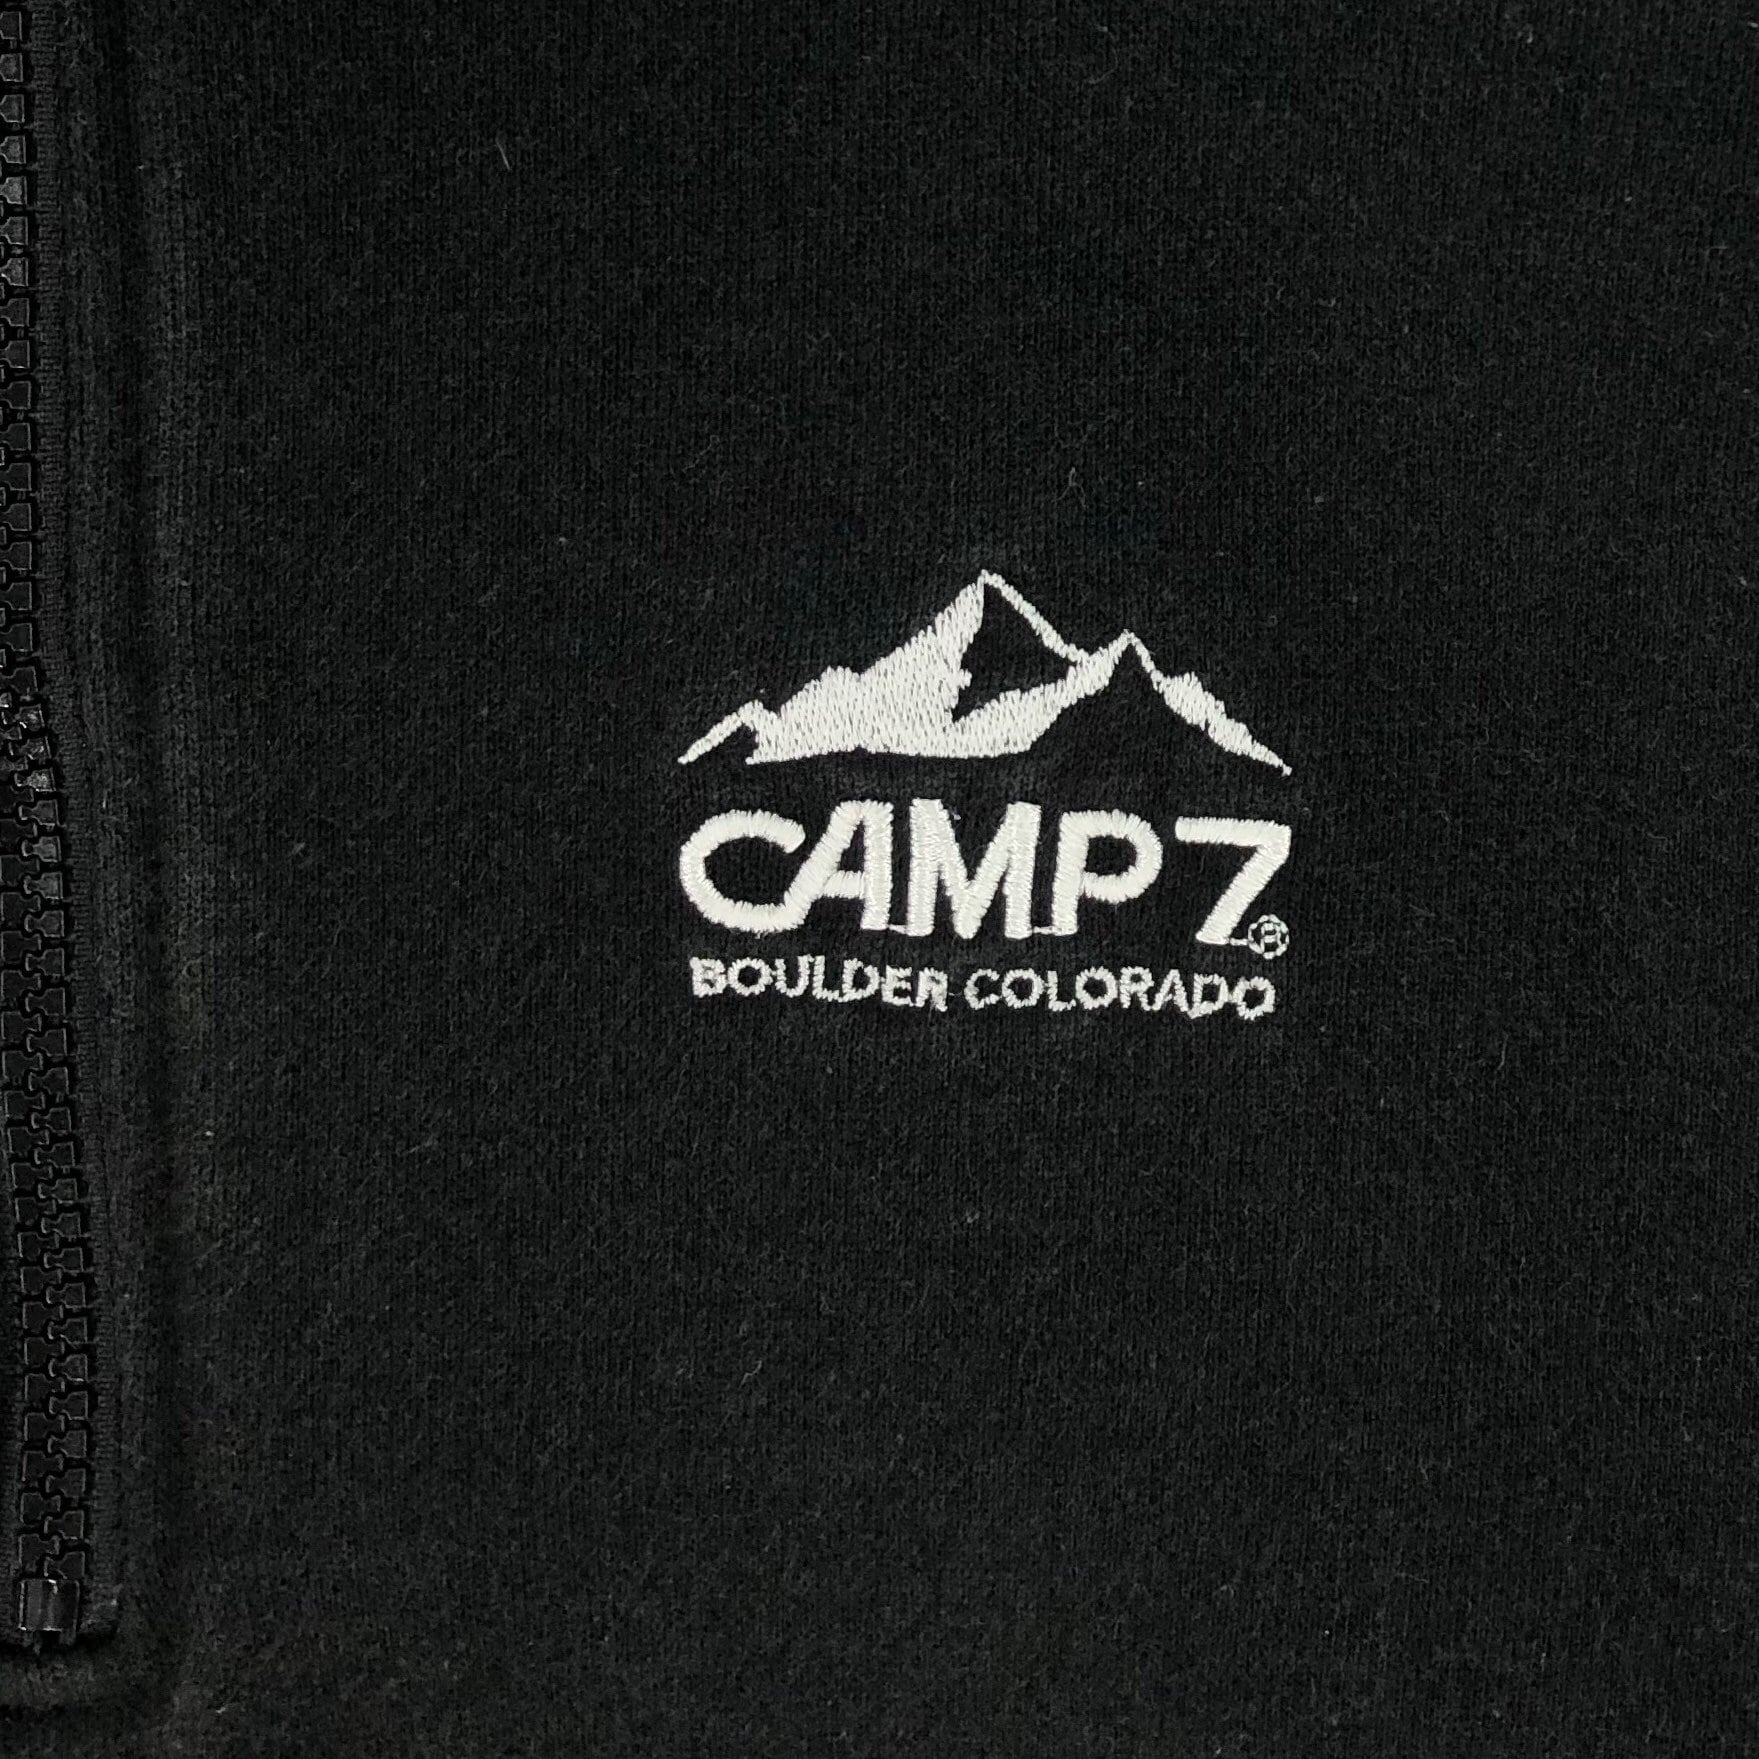 Vintage Camp 7 Boulder Colorado Sweatshirt Half zip Pullover Jumper sweatshirt Embroidery Logo Sportswear Streetwear